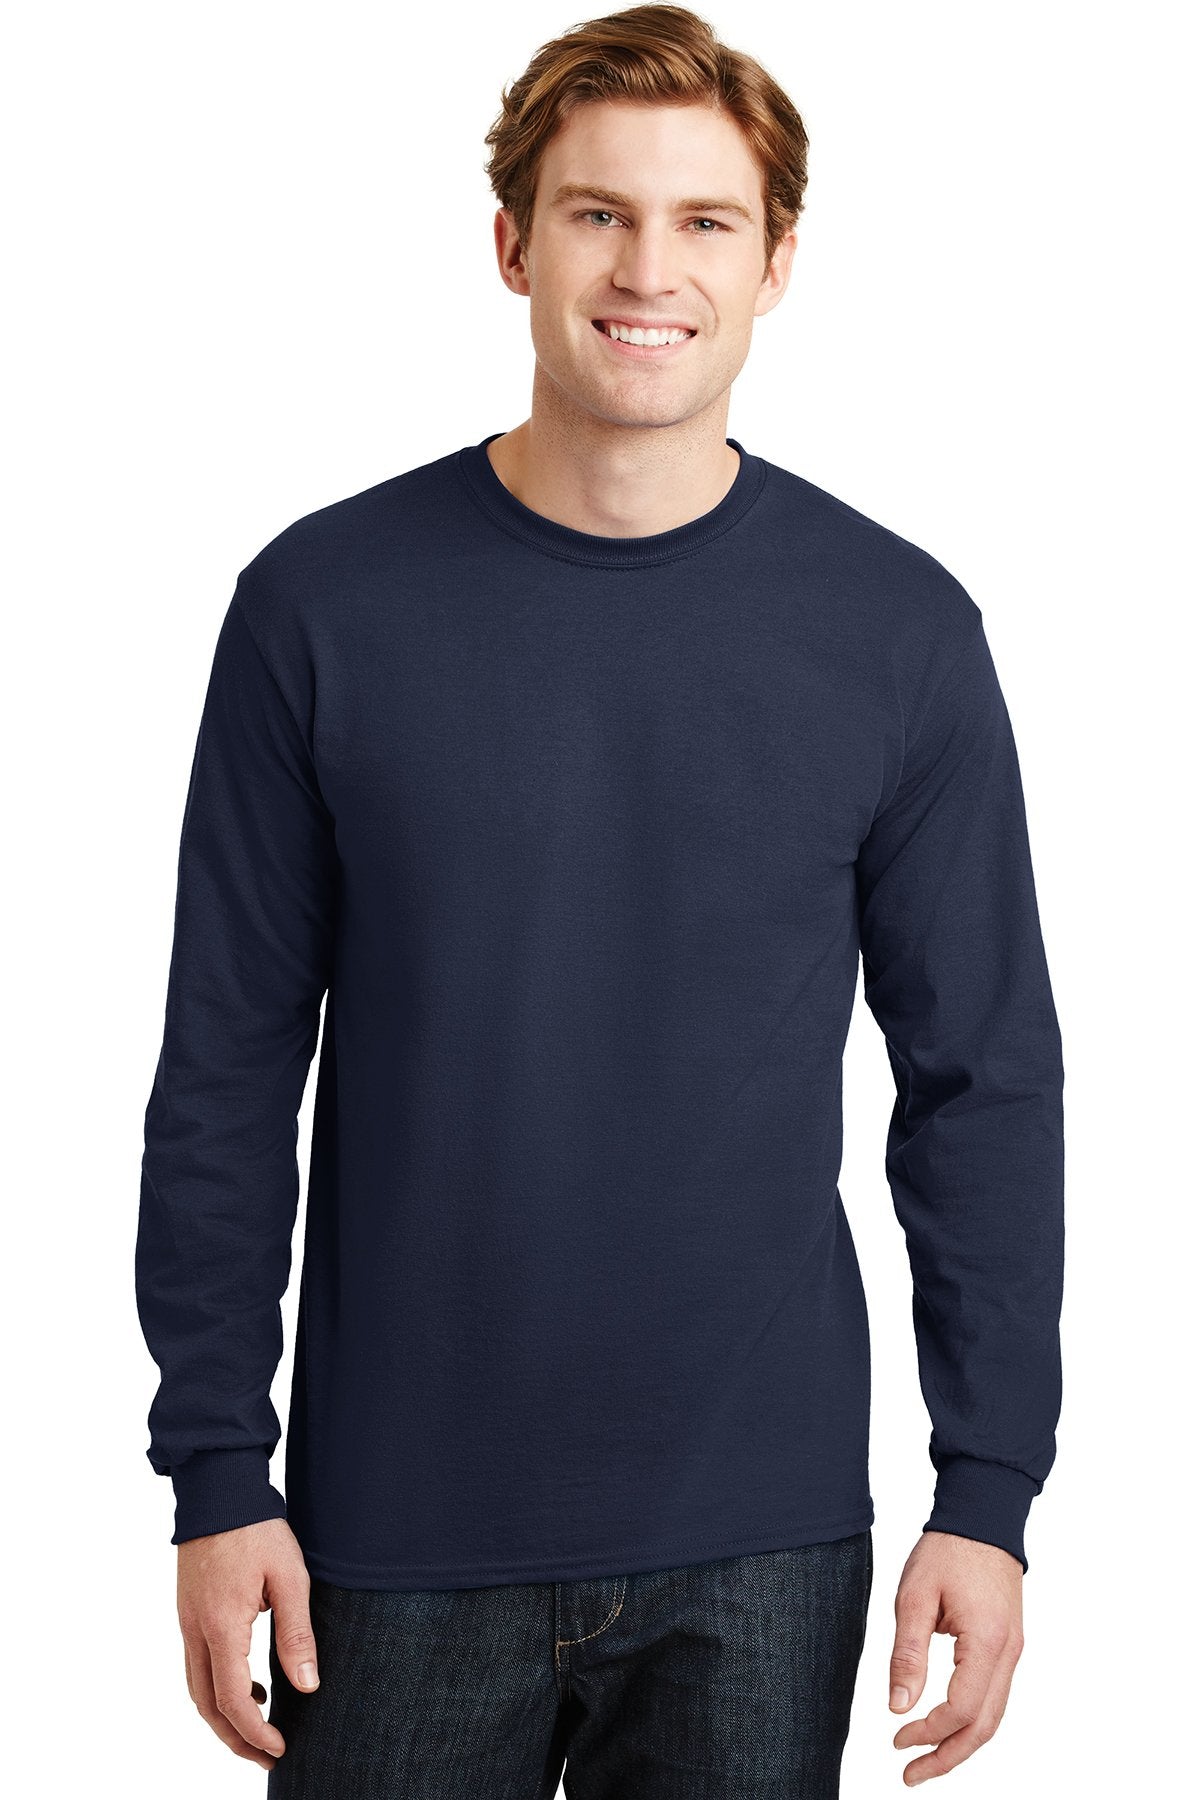 Gildan Dryblend Cotton Poly Long Sleeve T Shirt in Navy, add a custom ...